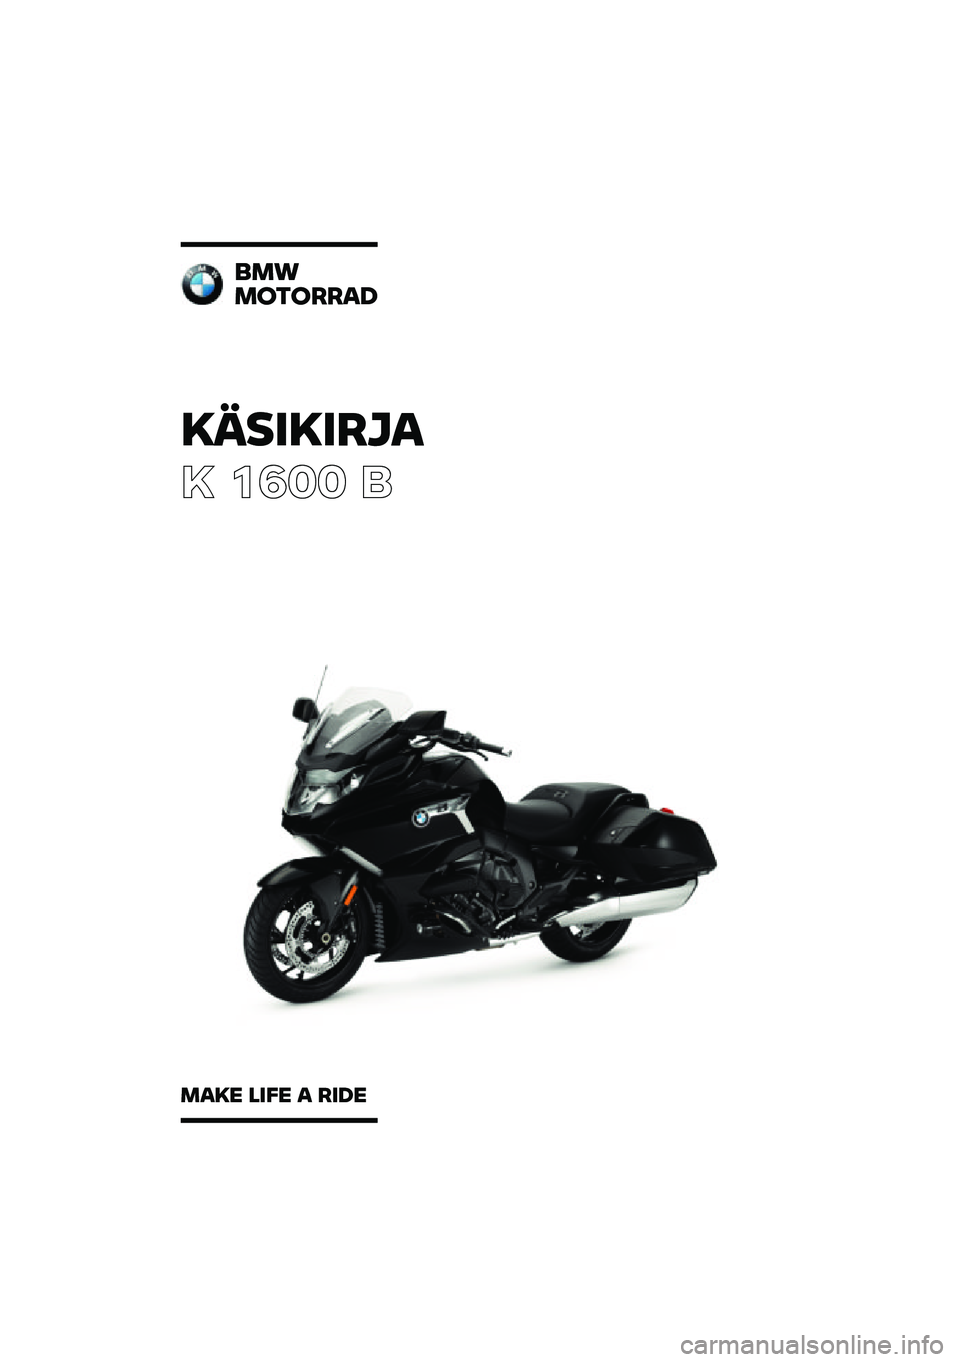 BMW MOTORRAD K 1600 B 2020  Käsikirja (in Finnish) �������\b�	�
� ���� �	
�
��\f
��
��
�\b�\b��
���� ���� � �\b��� 